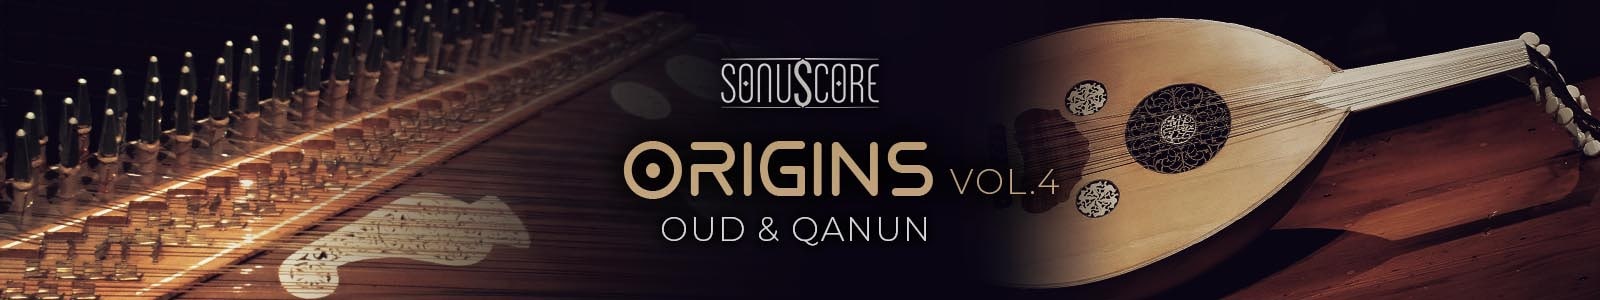 origins vol 4